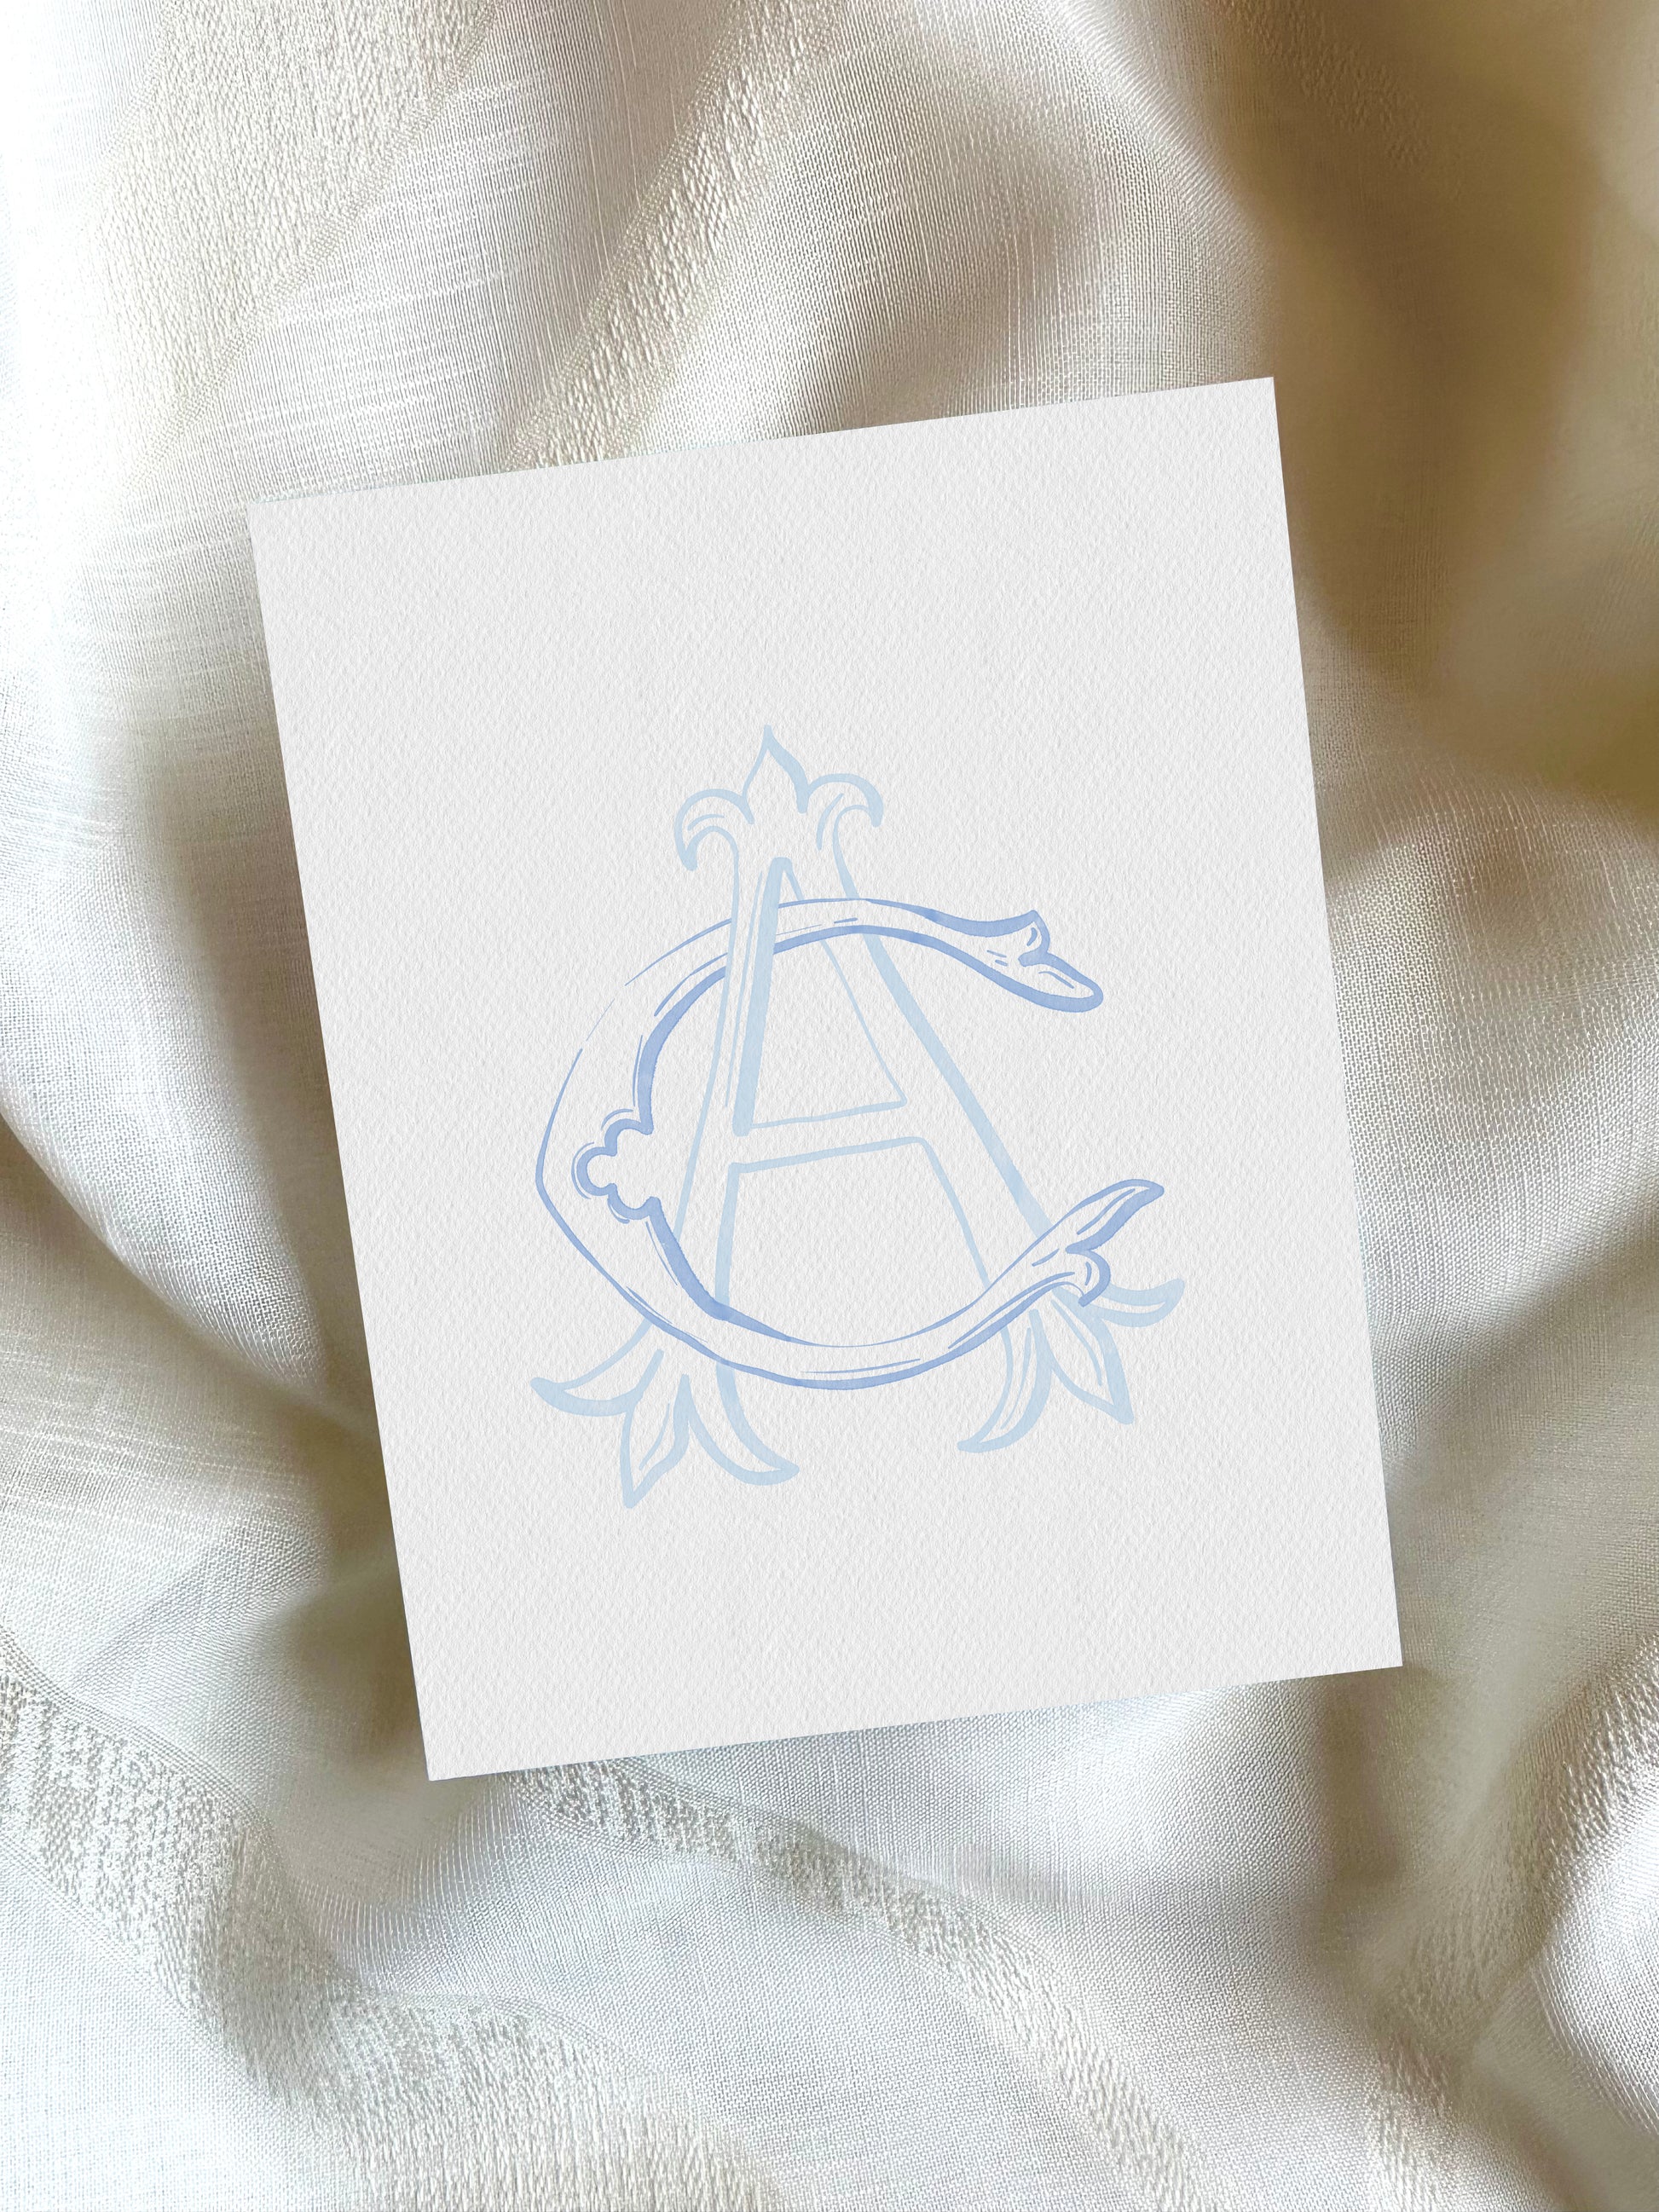 2 Letter Monogram with Letters AC CA | Digital Download - Wedding Monogram SVG, Personal Logo, Wedding Logo for Wedding Invitations The Wedding Crest Lab